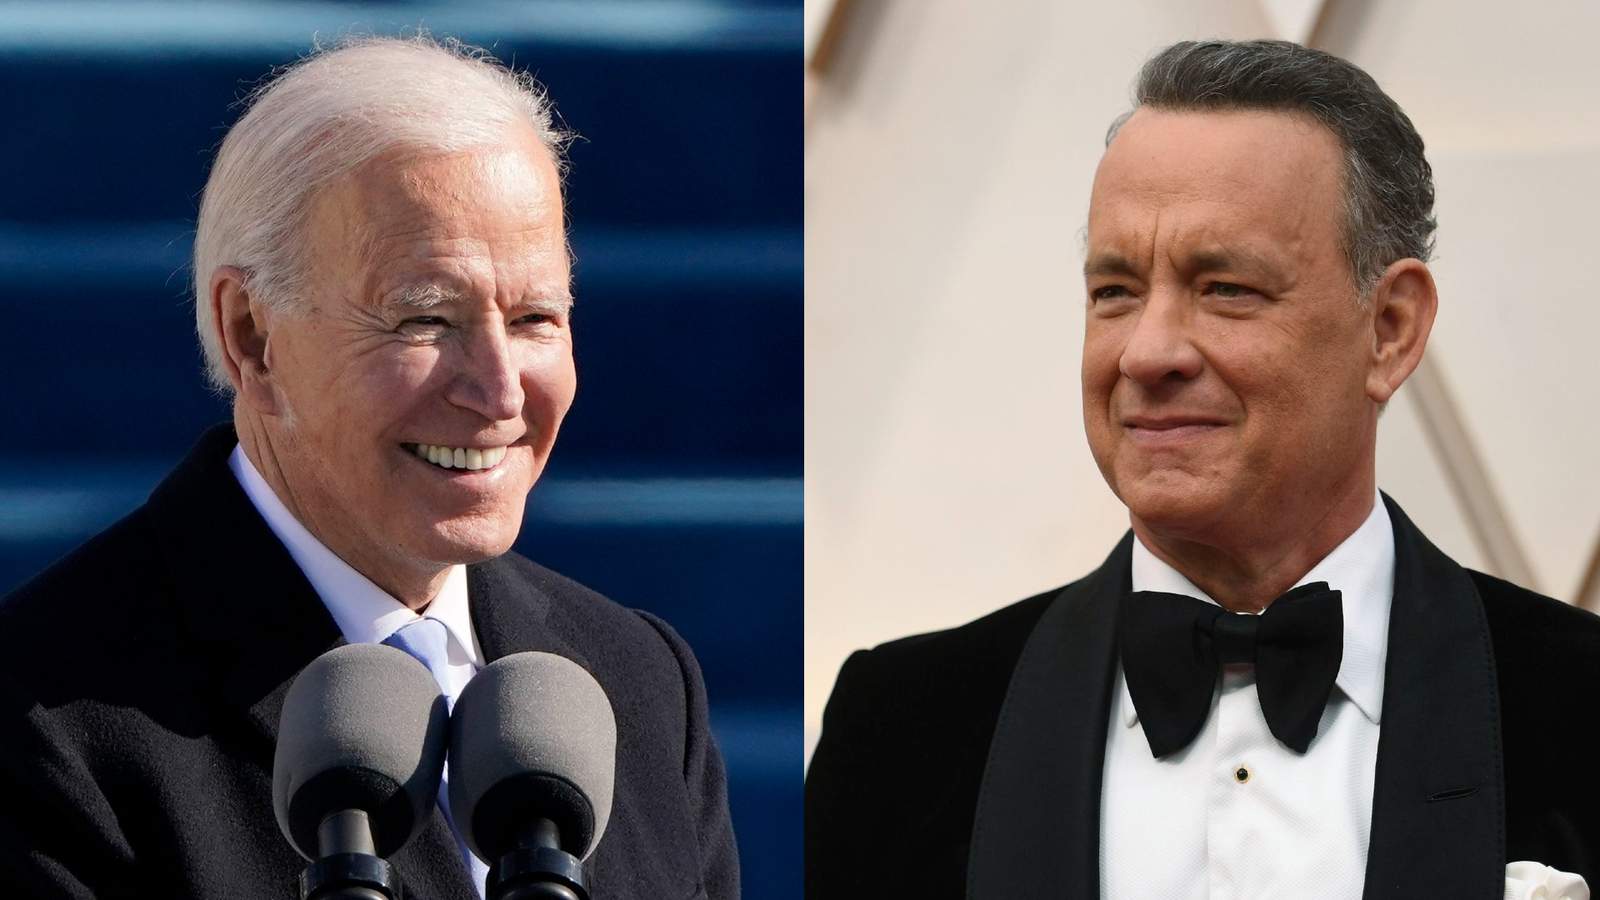 WATCH: Tom Hanks hosts TV special marking President Joe Biden’s inauguration